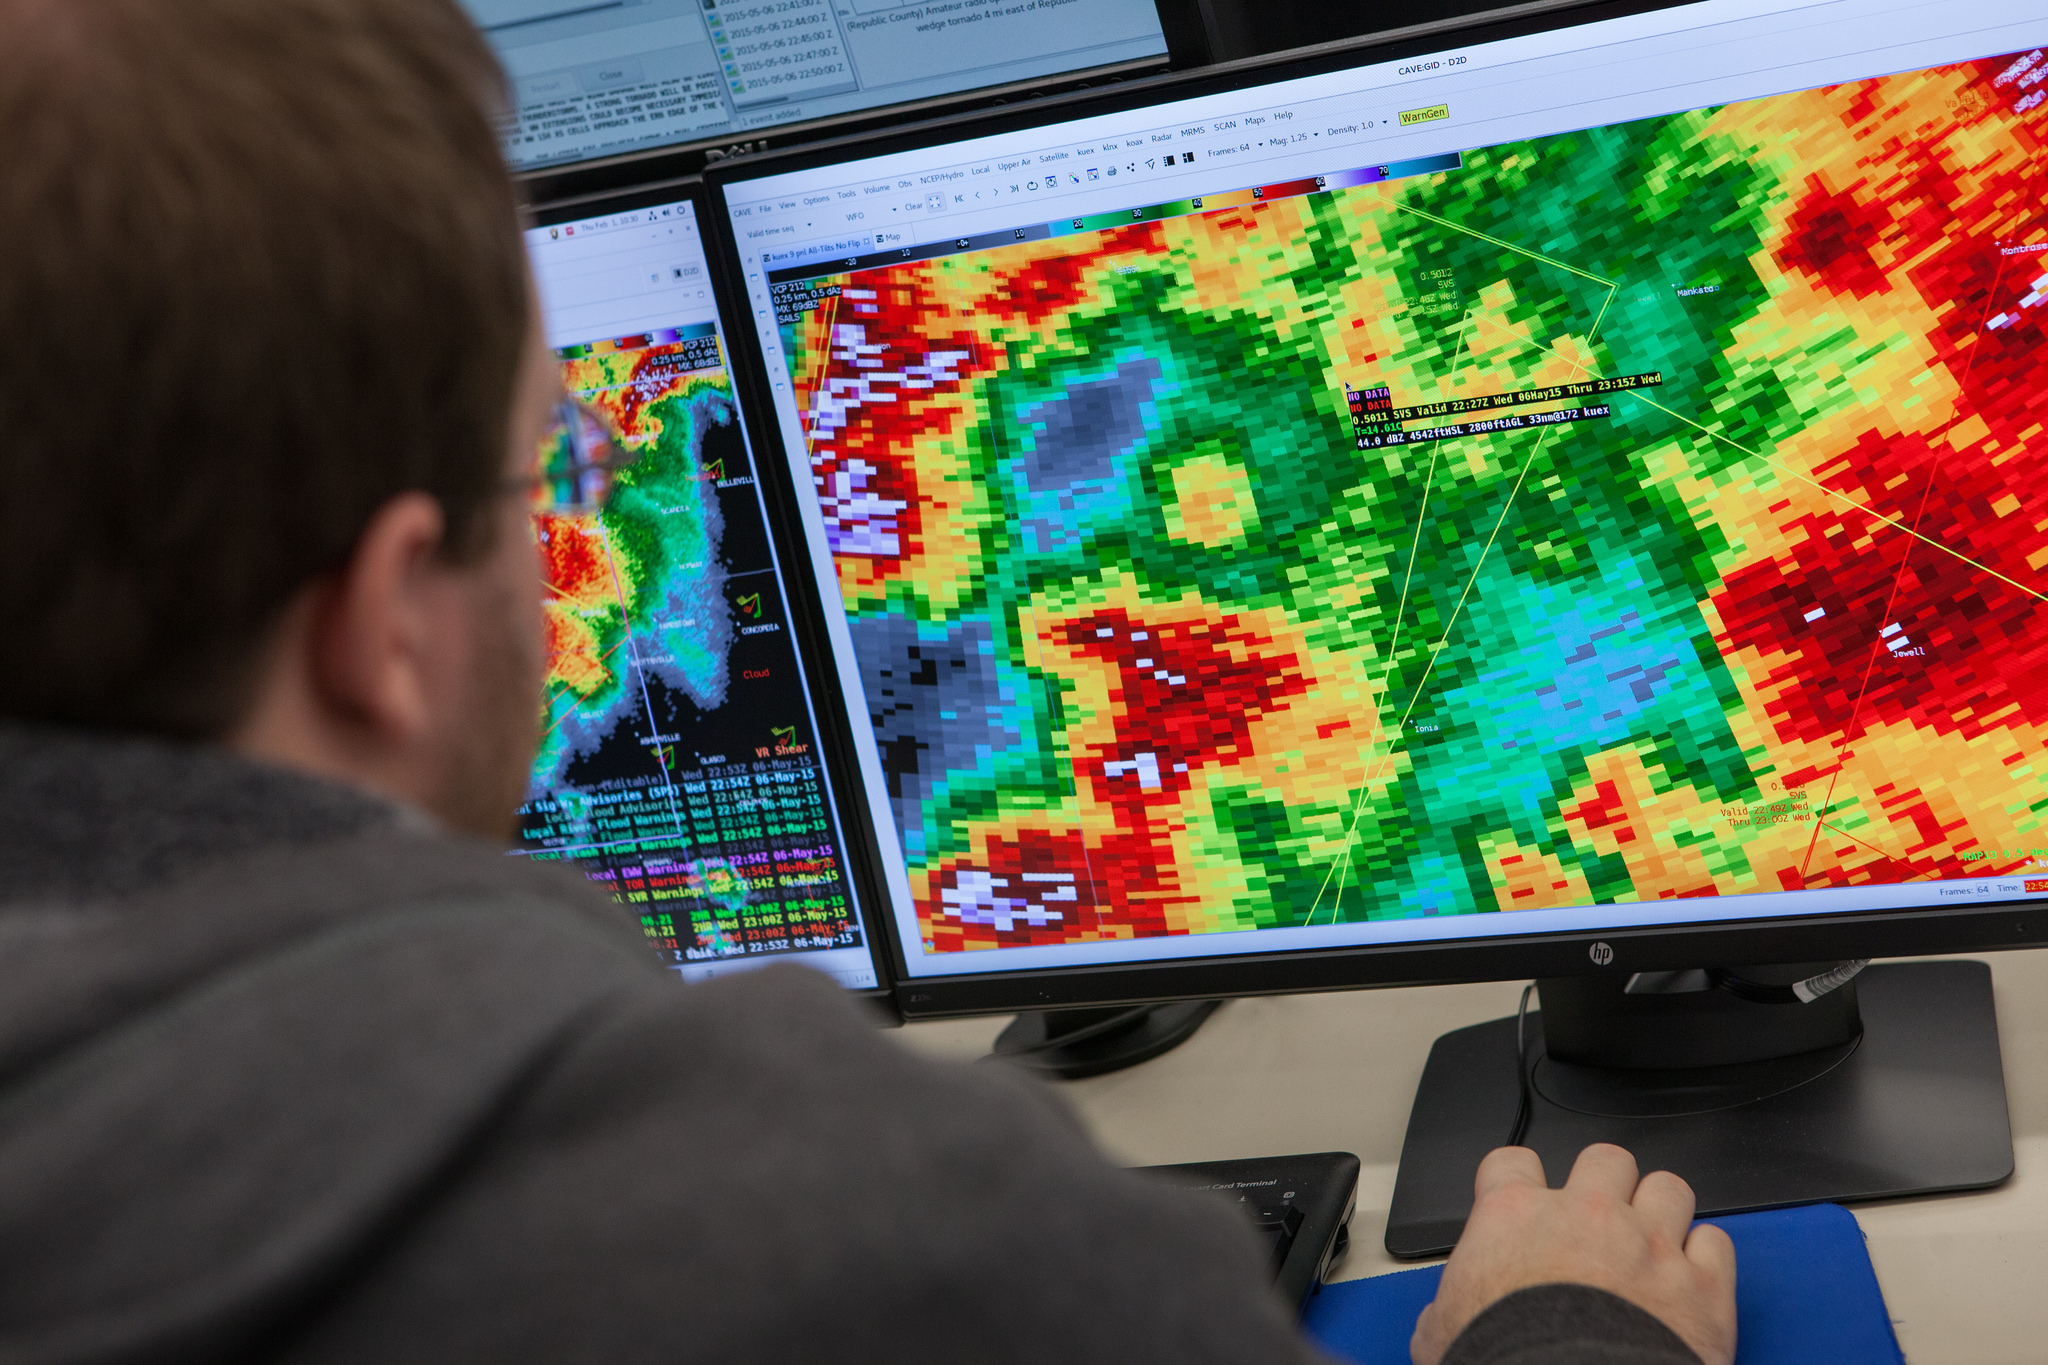 Radar experts publish new book on weather radar technology